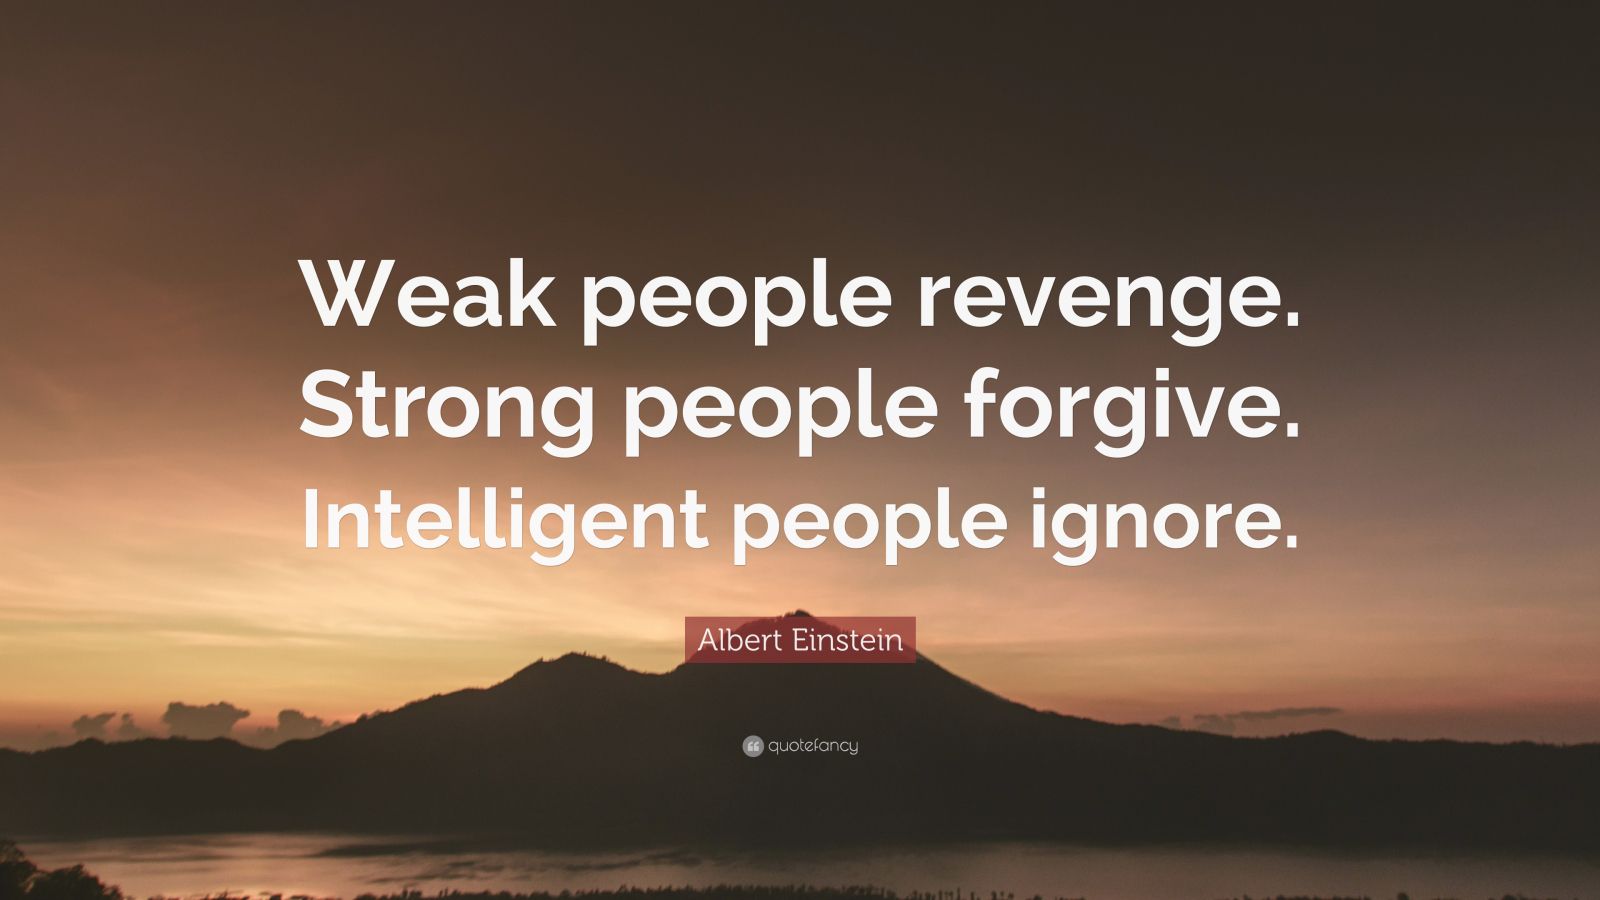 Albert Einstein Quote: “Weak people revenge. Strong people forgive